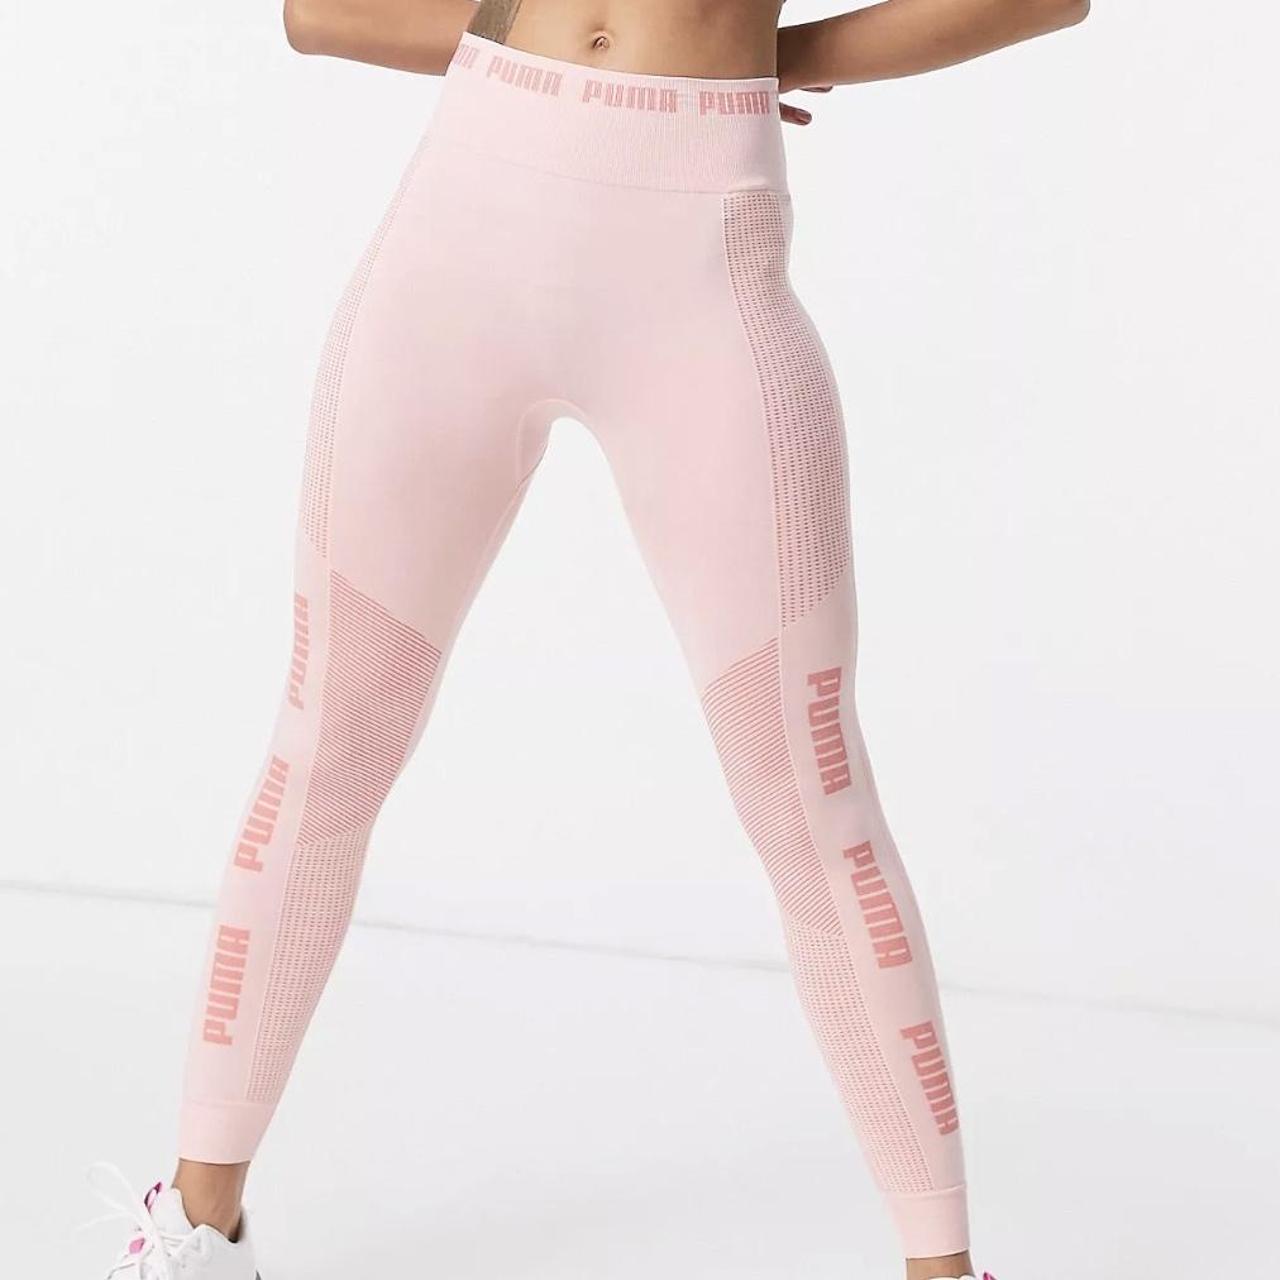 Puma evoknit seamless leggings in pink - selling - Depop